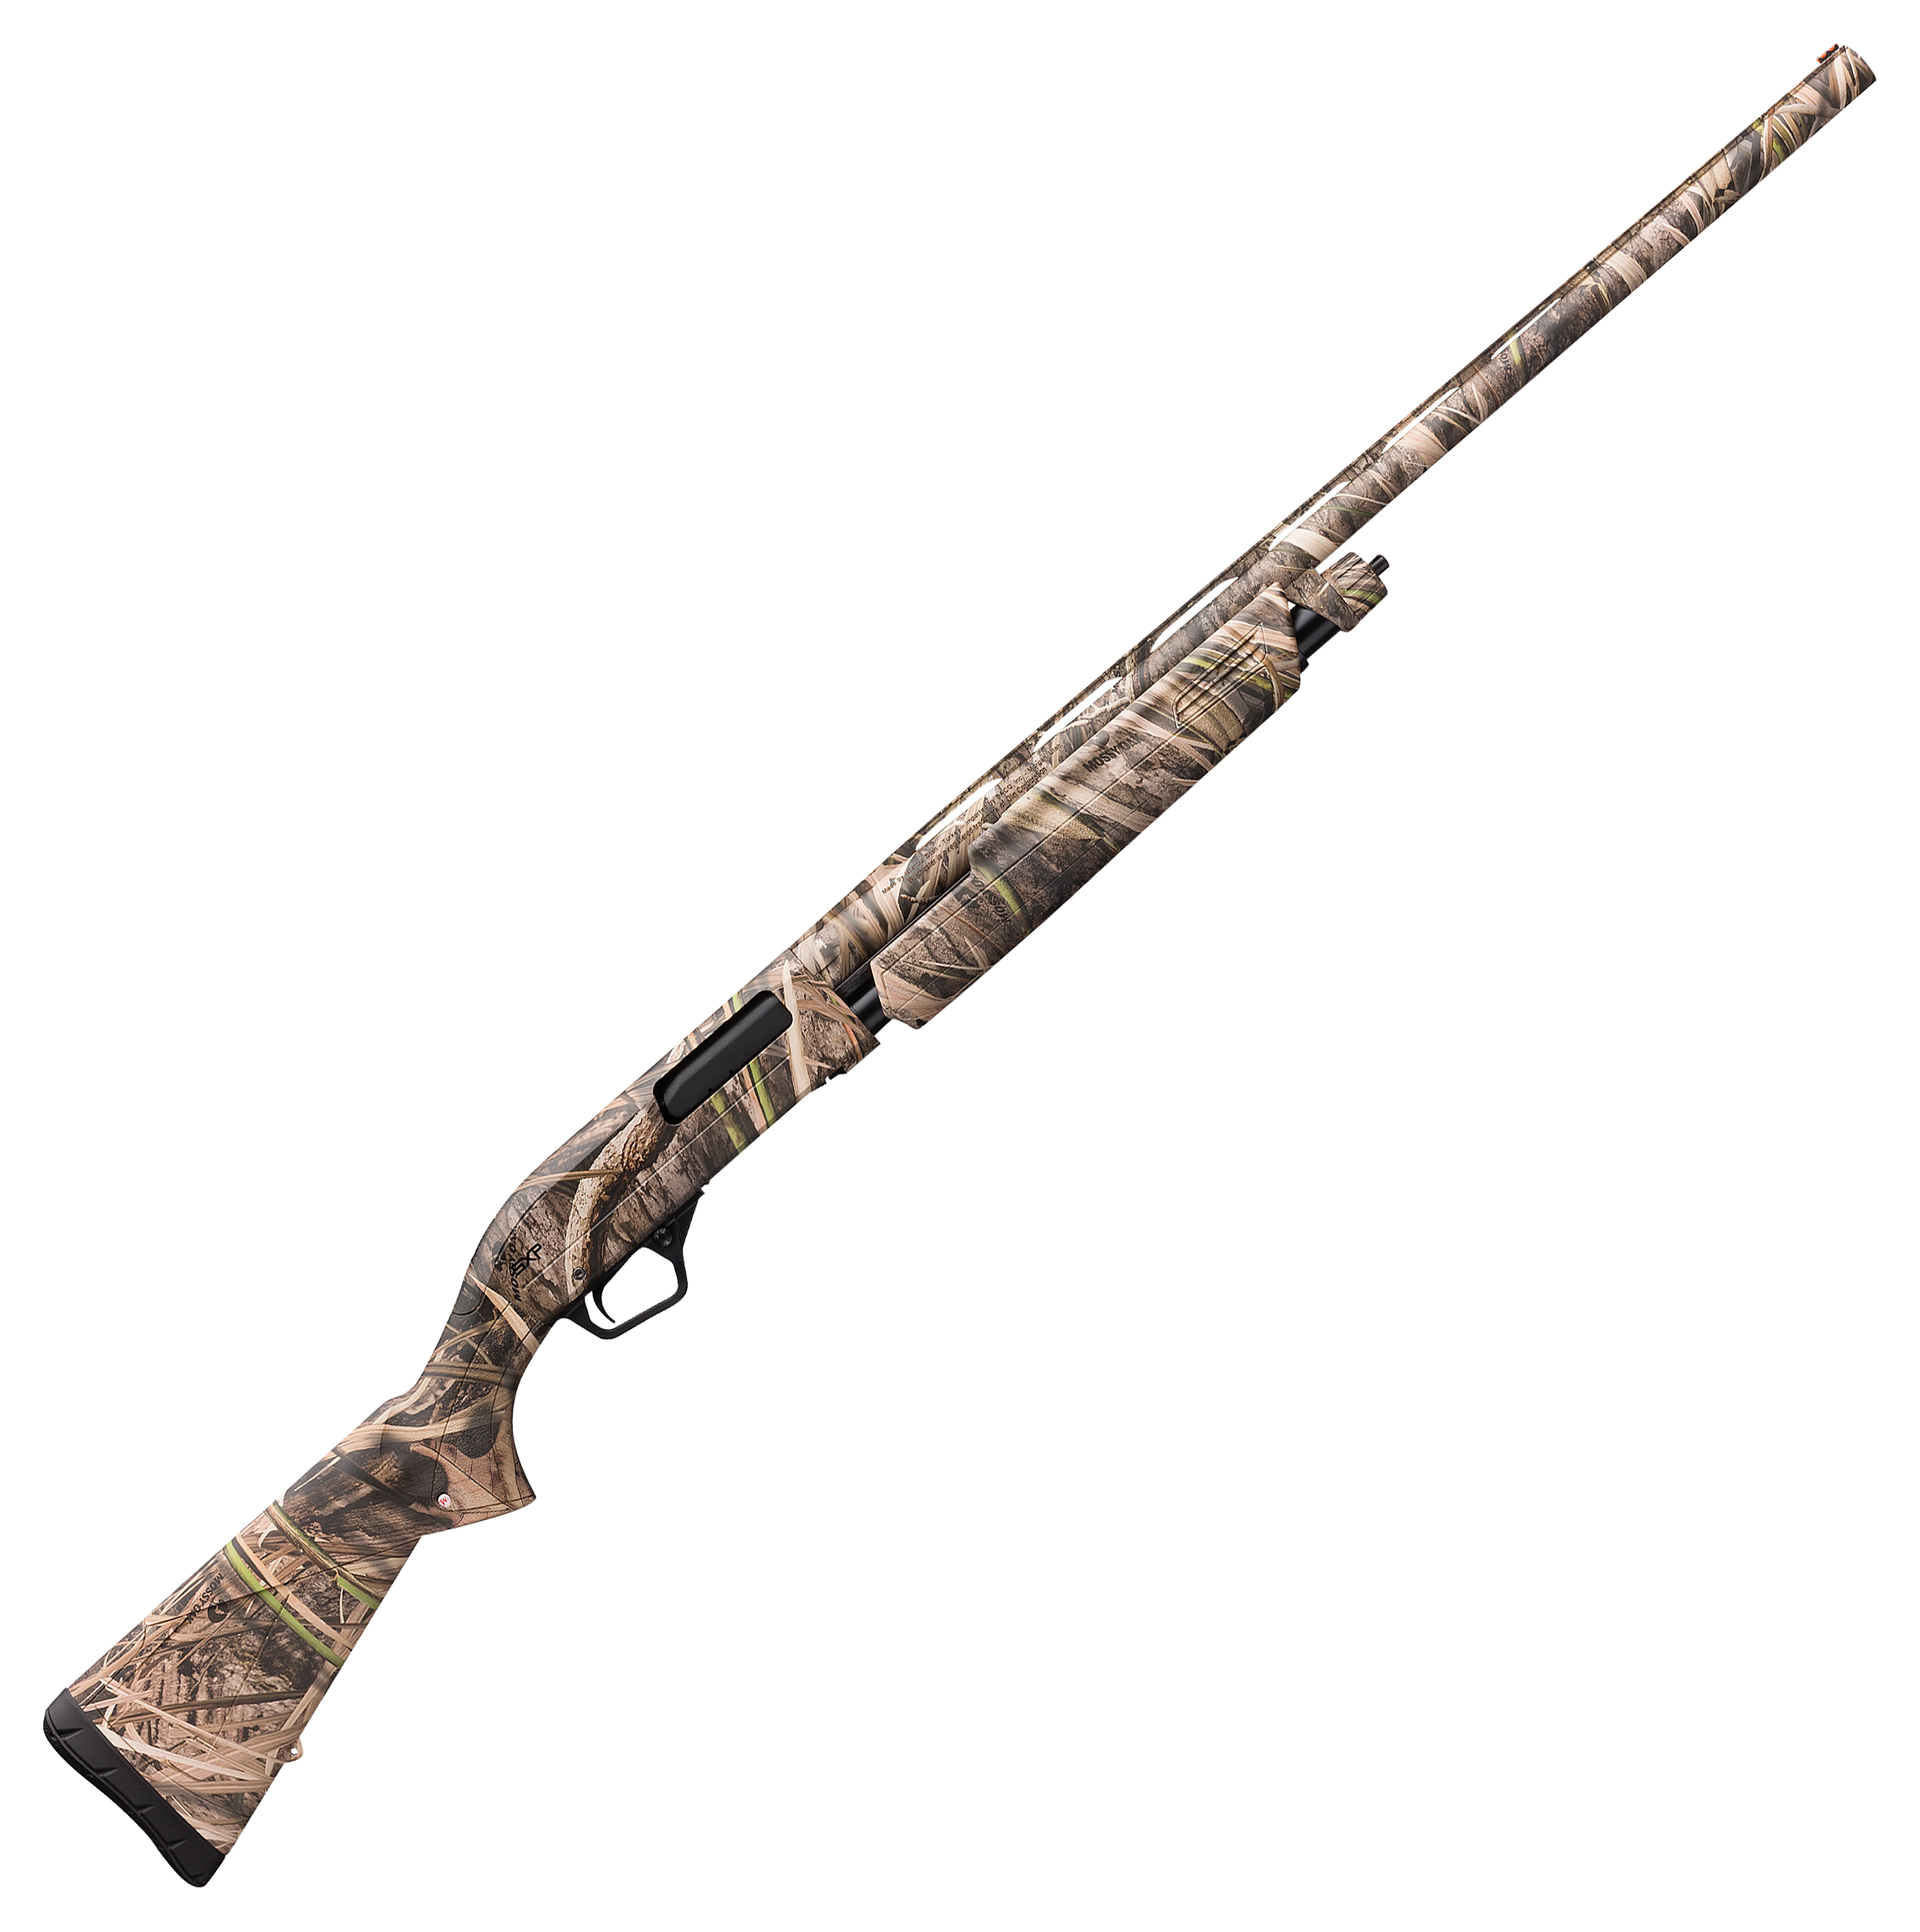 Winchester SXP Waterfowl Hunter Pump-Action Shotgun